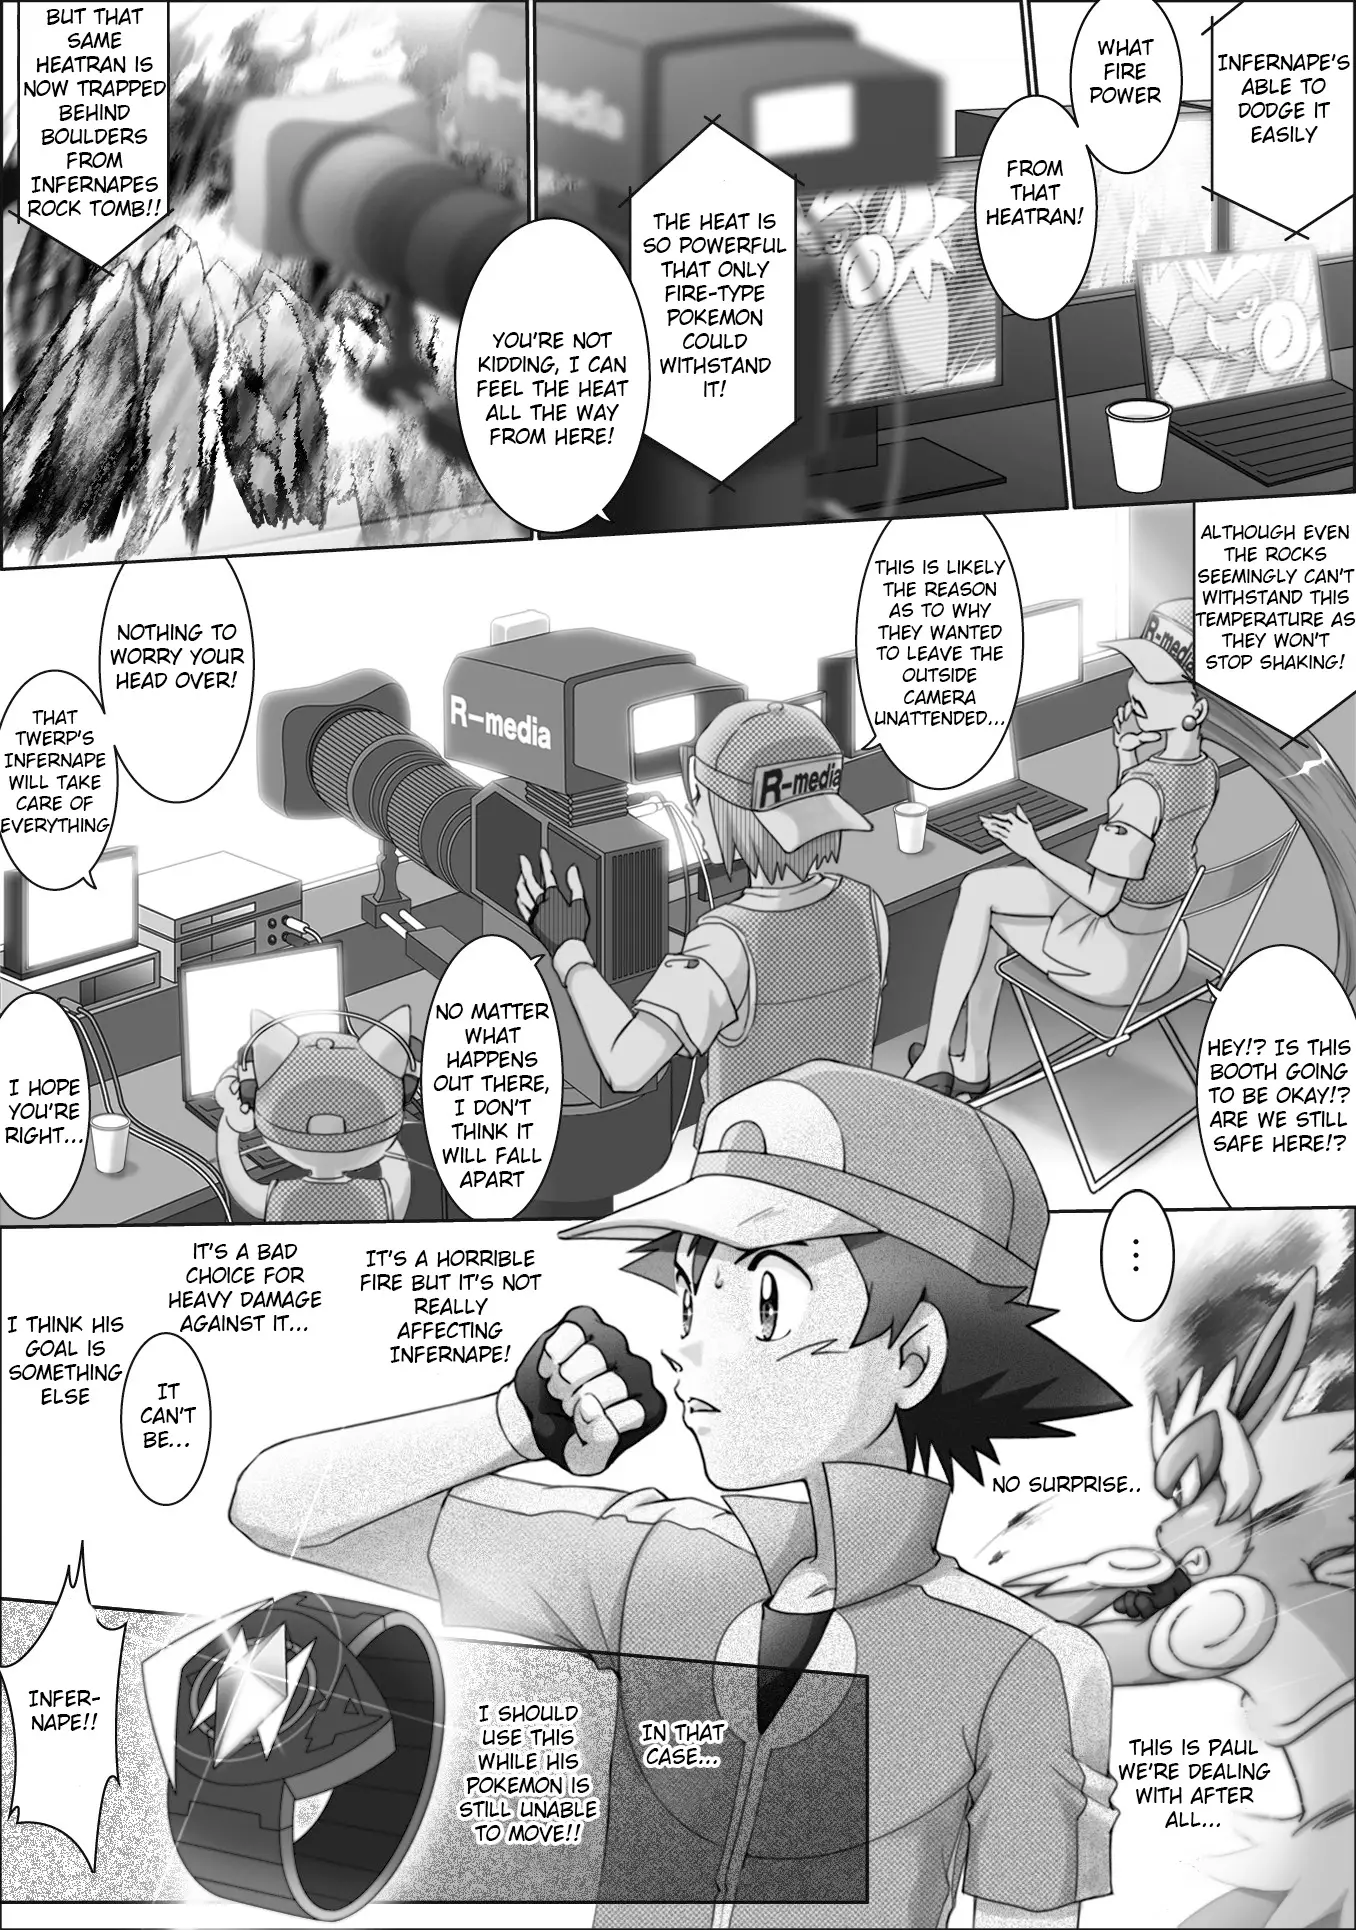 Pokemon: The World Champion Season - 54 page 8-5a41d578